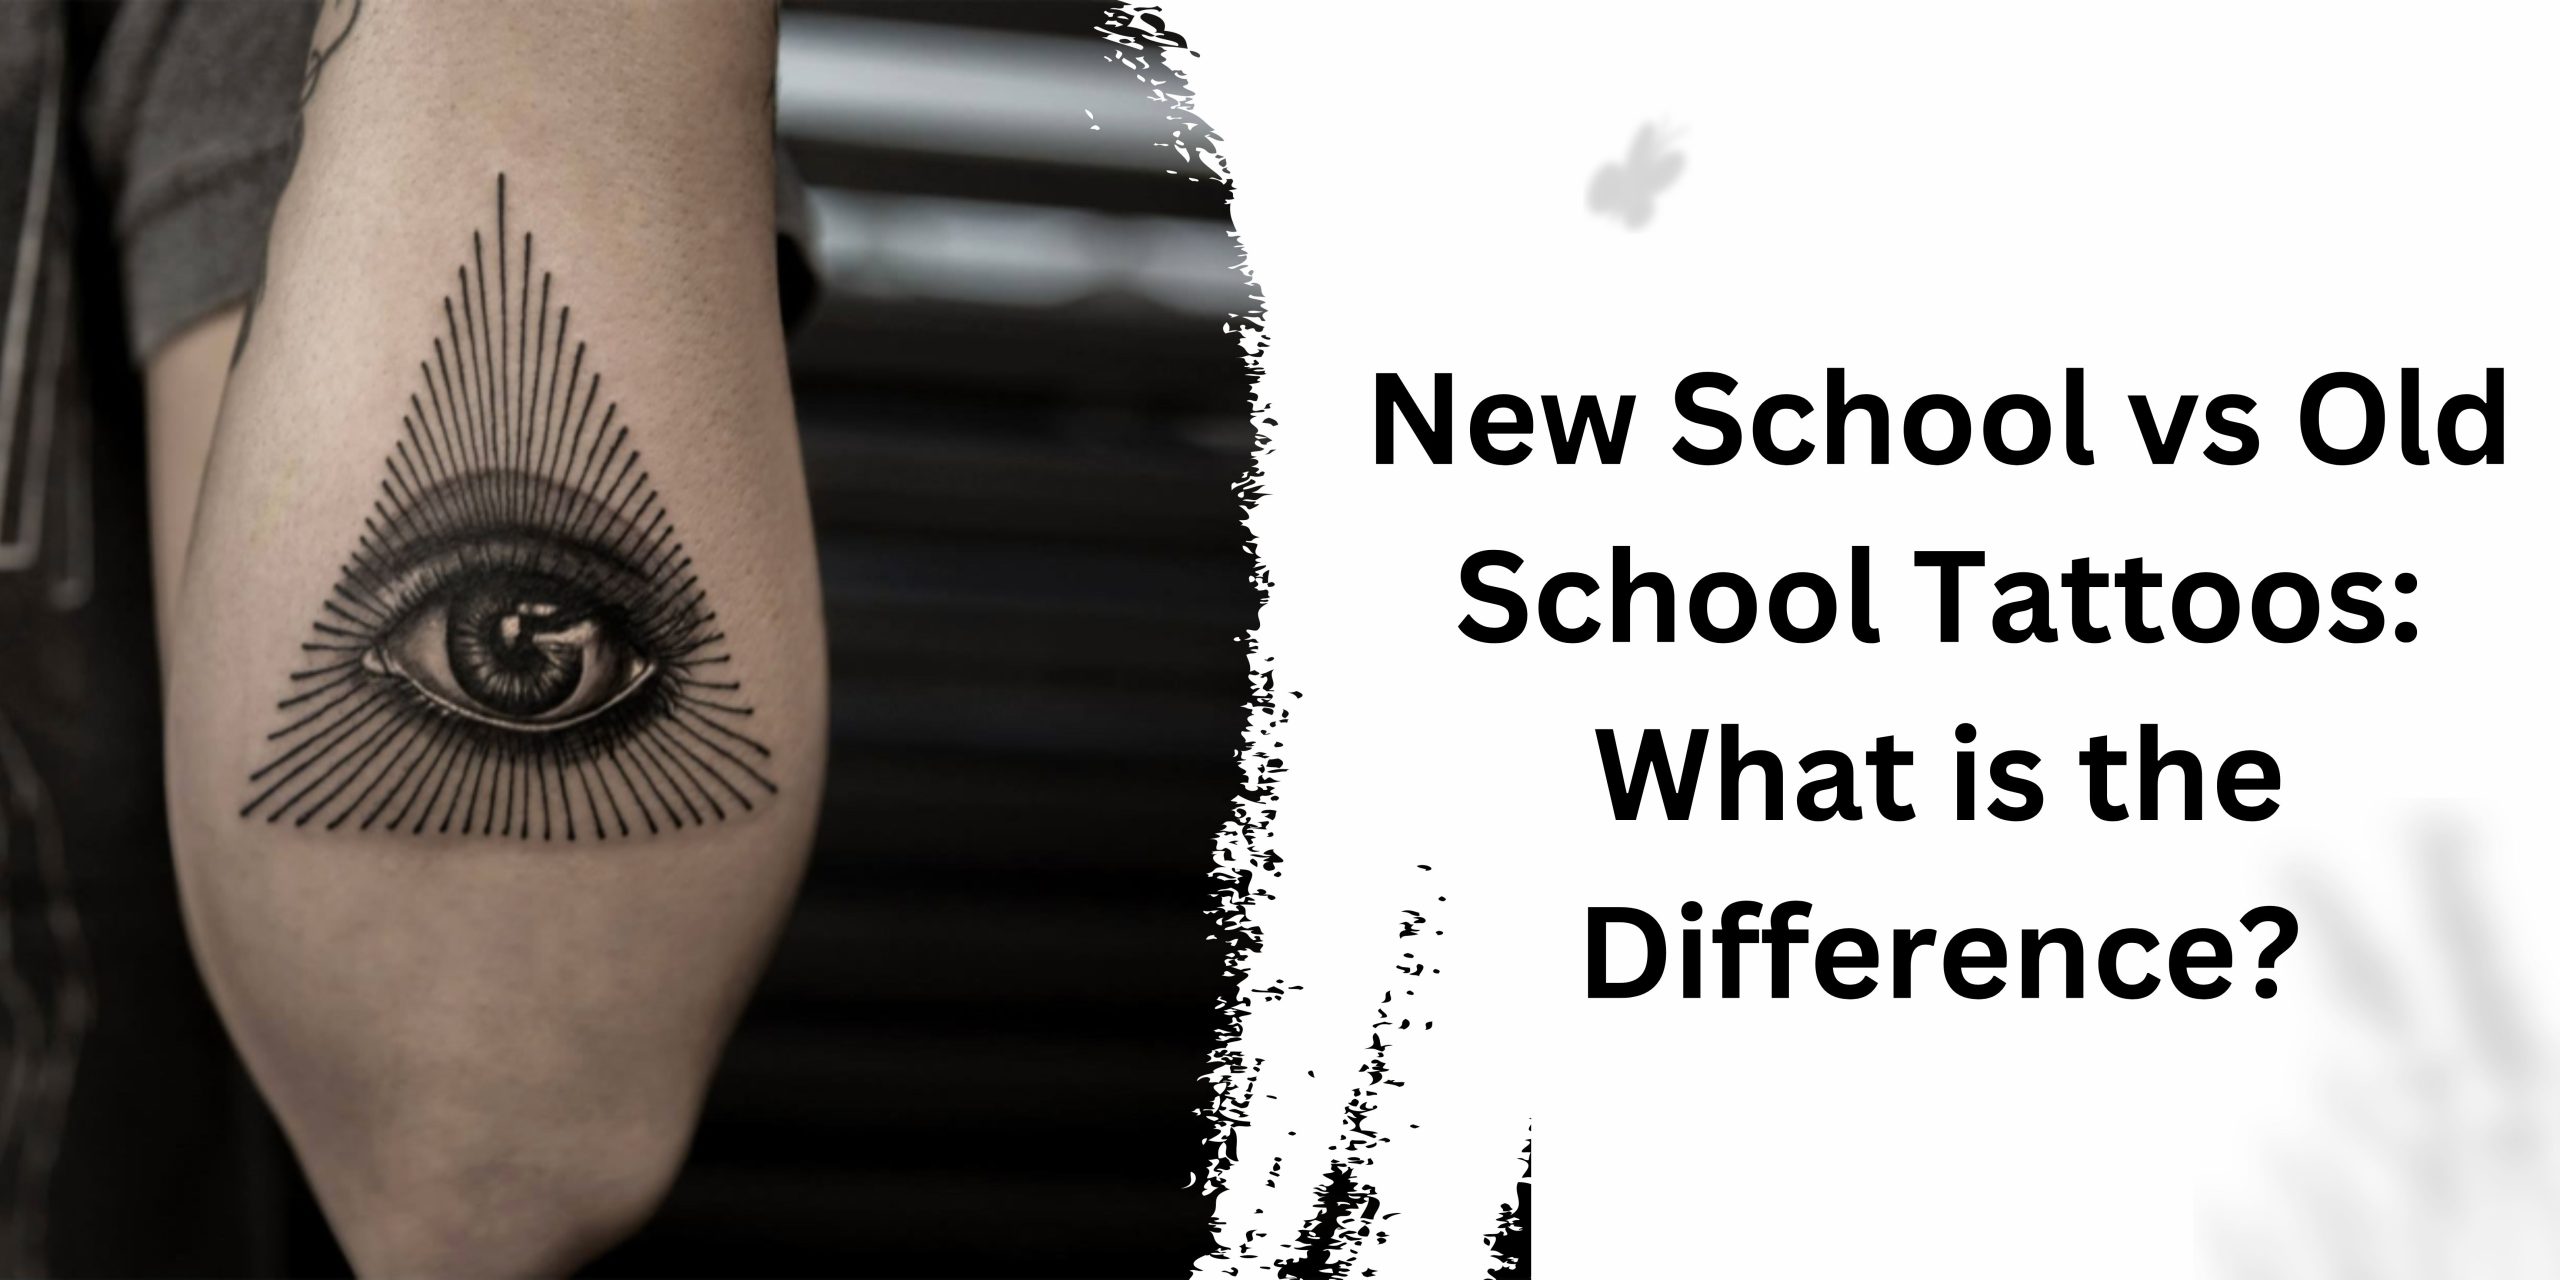 New School vs Old School Tattoos